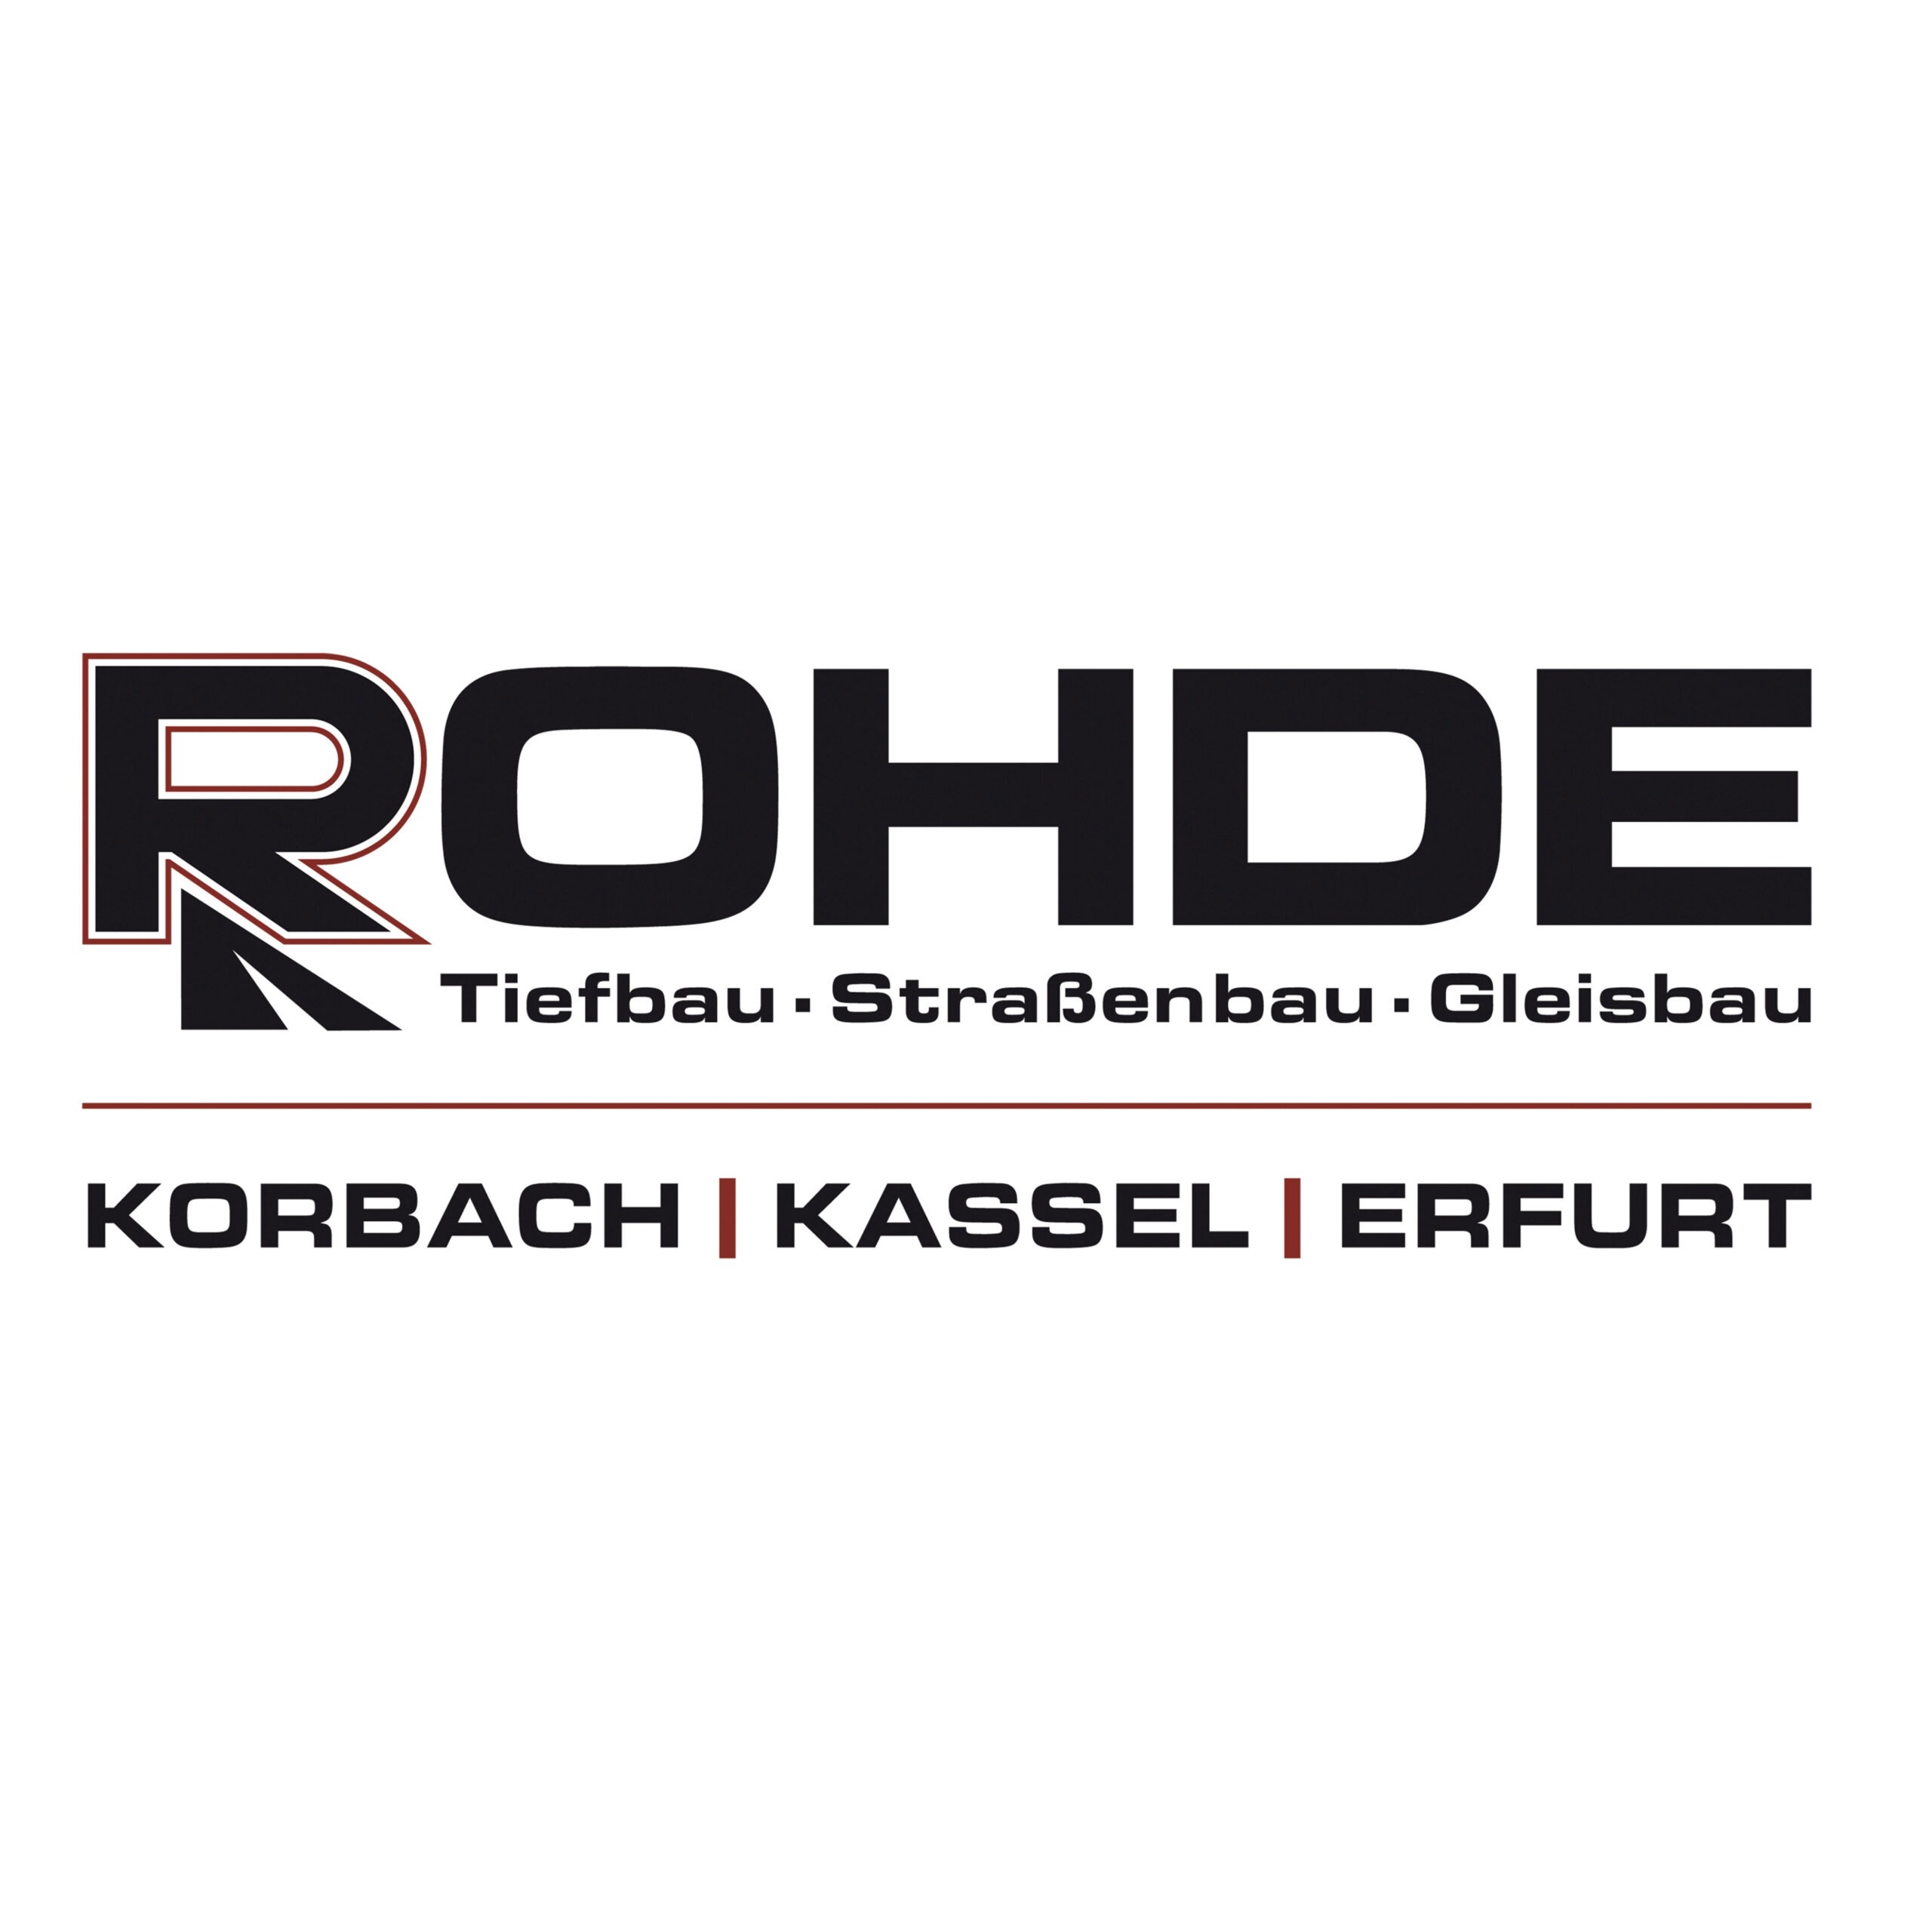 rohde logo rgb